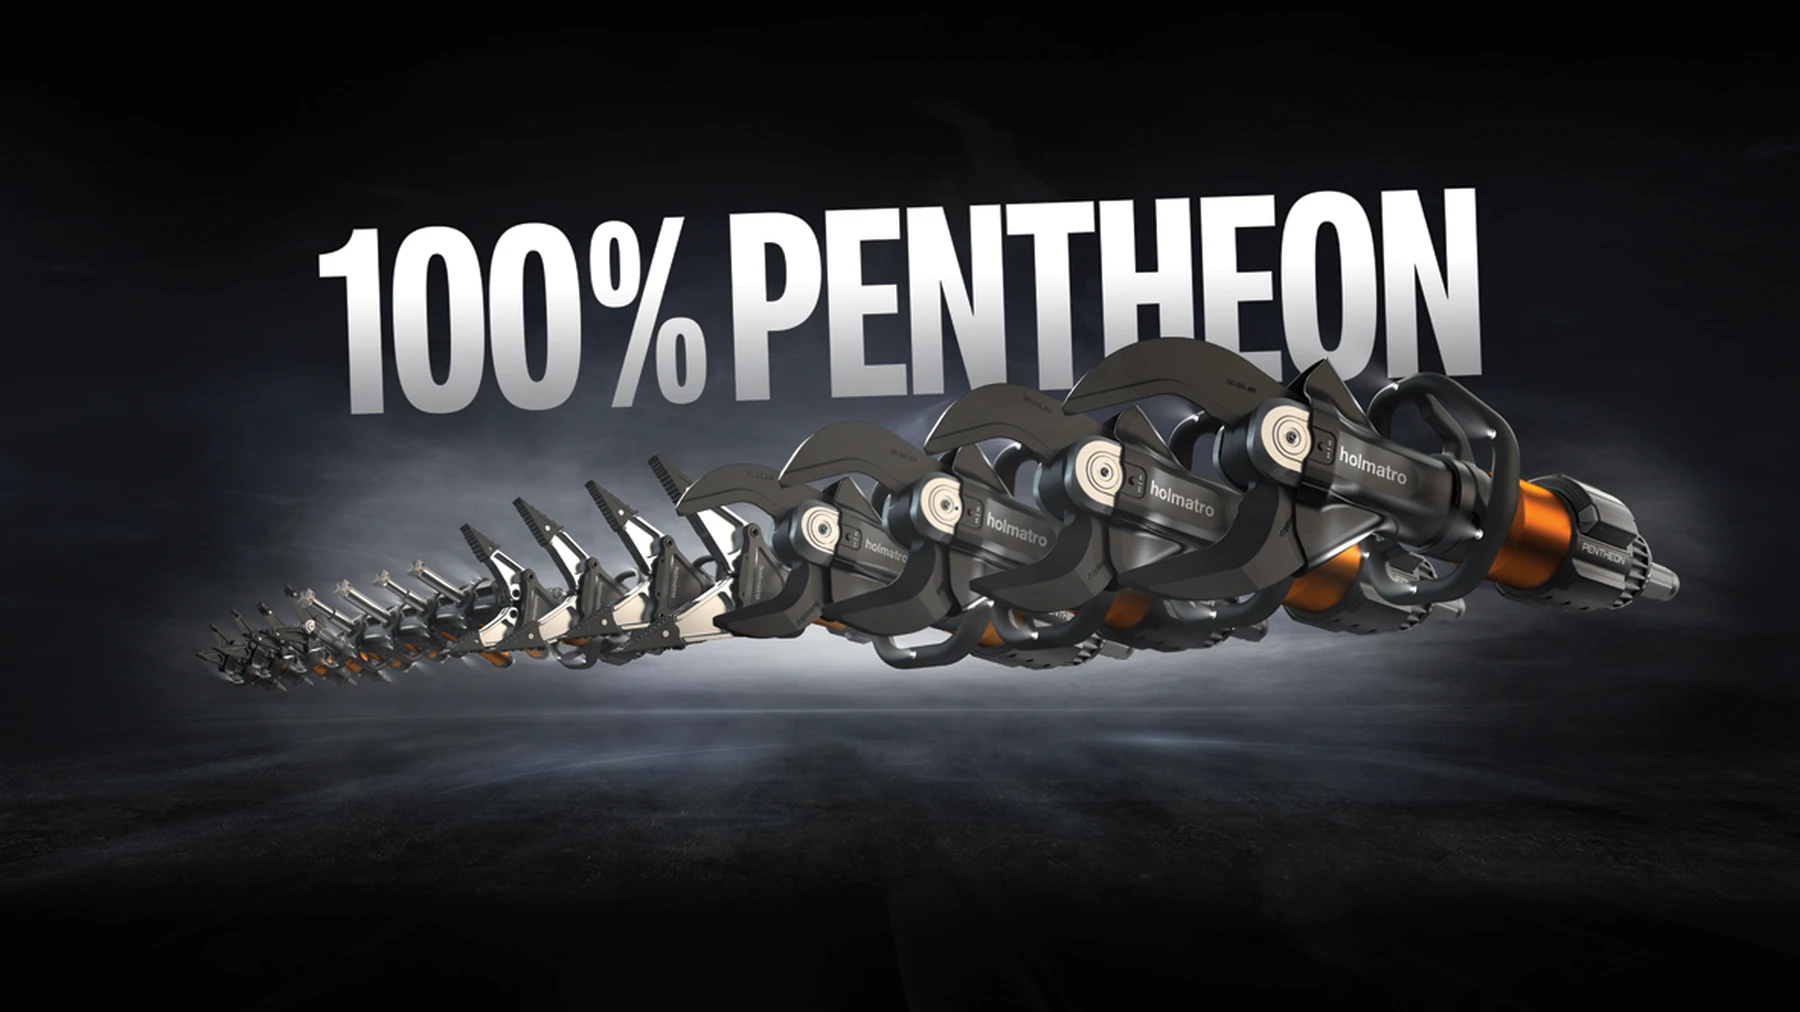 100% pentheon